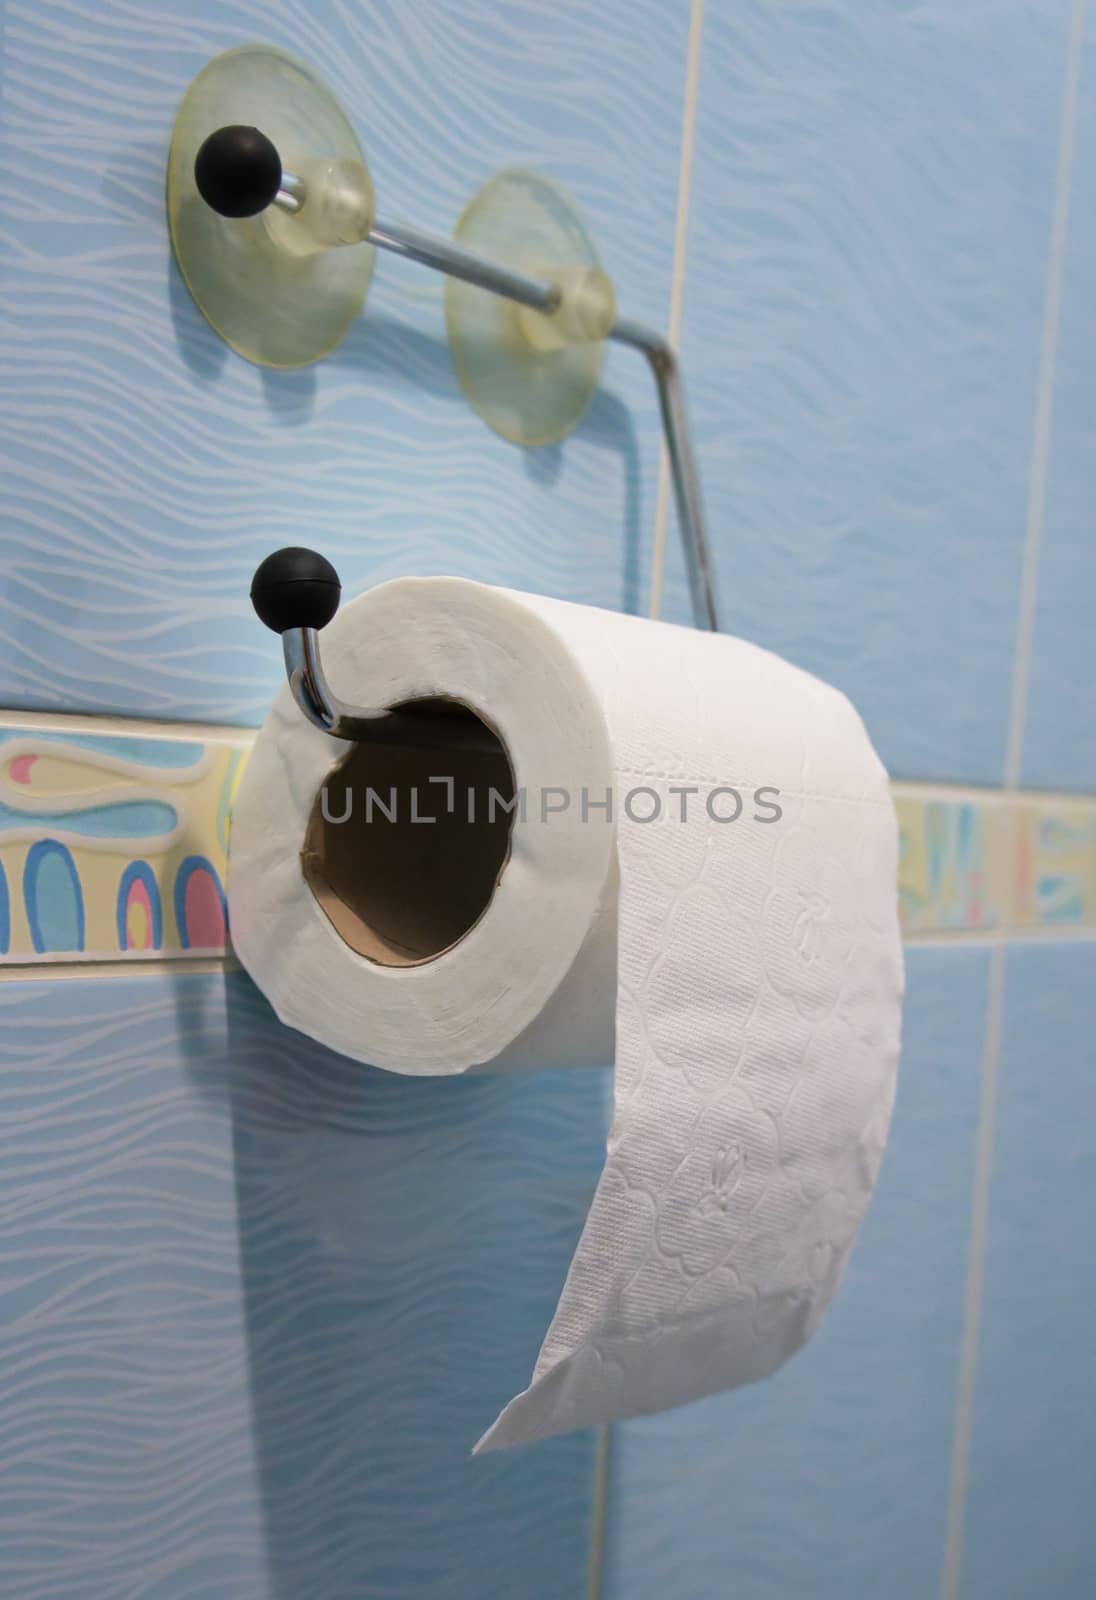 Toilet paper roll hanging over blue ceramic tiles.